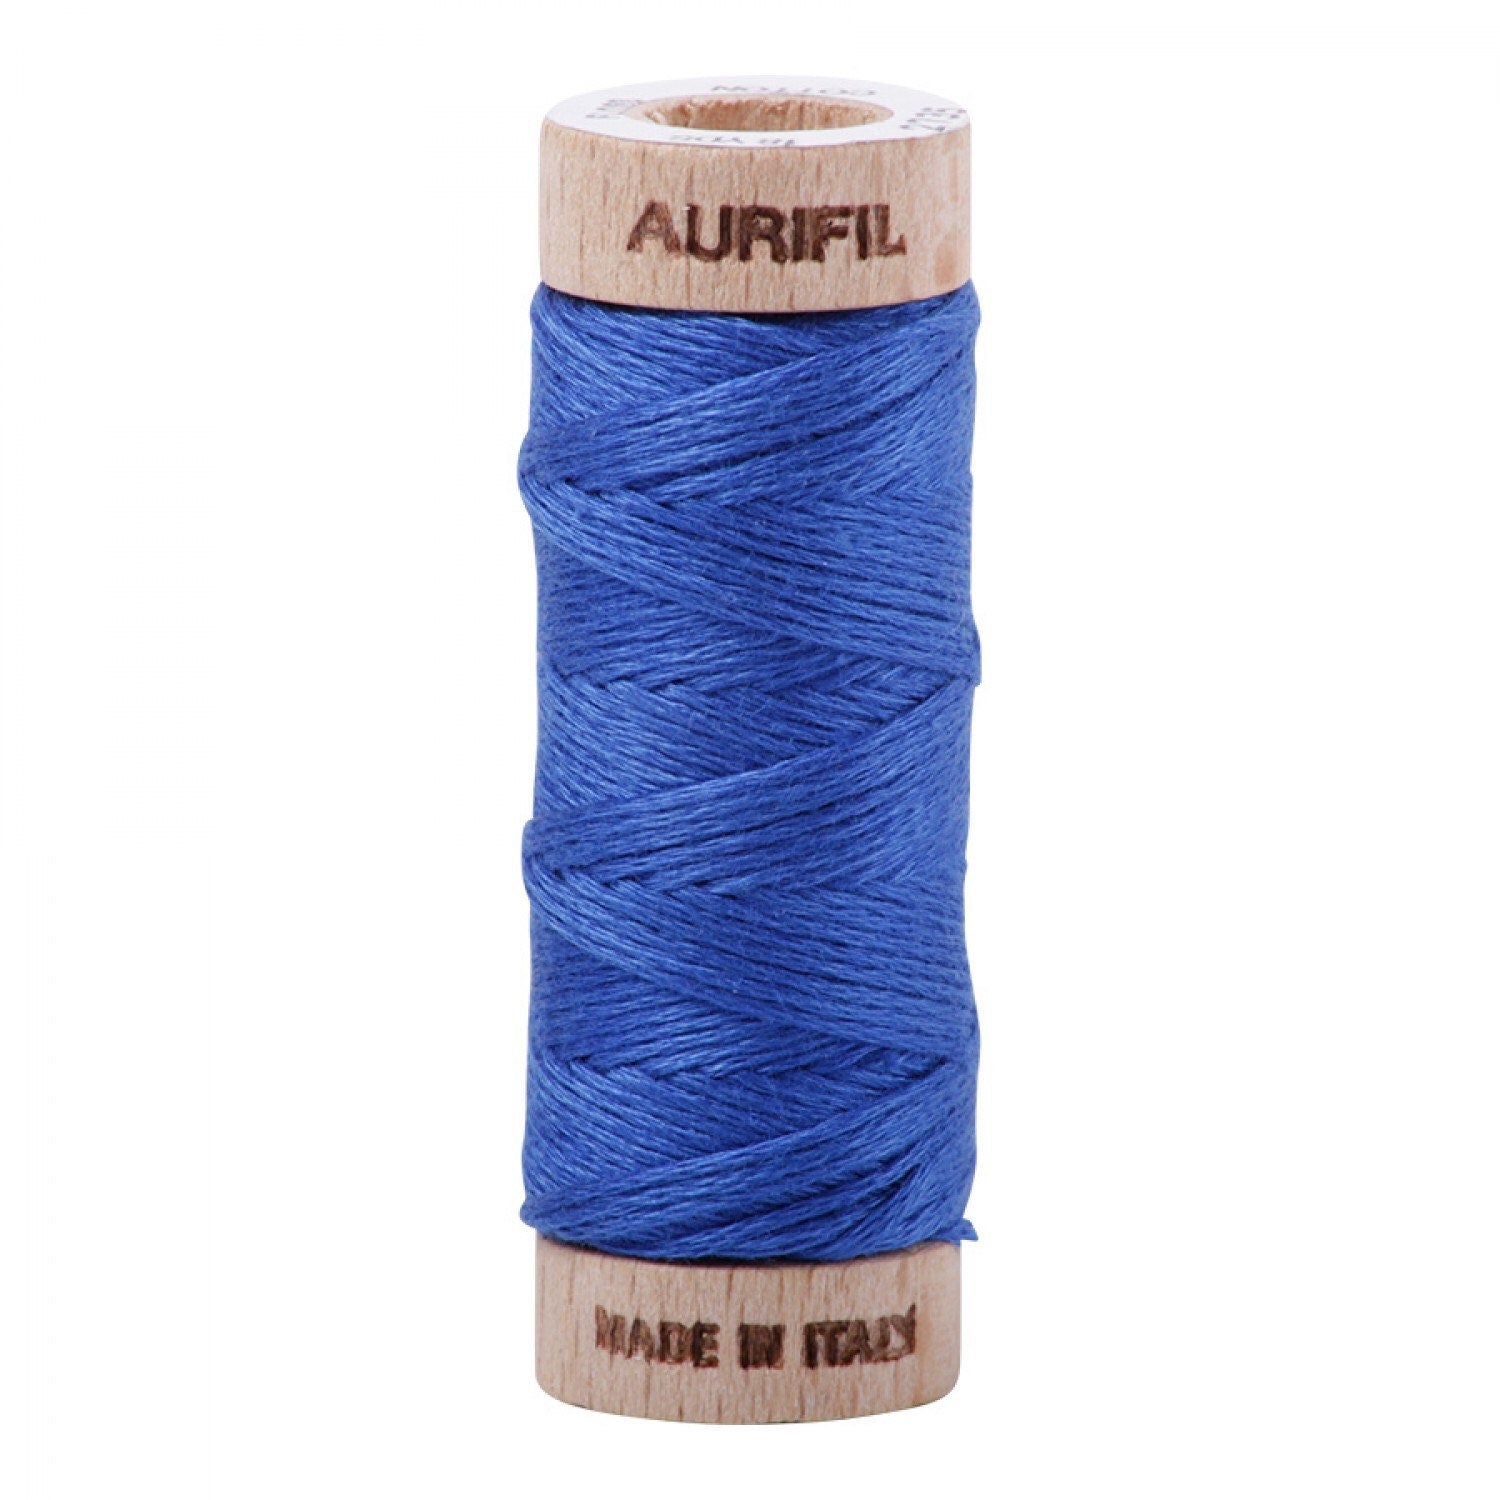 Medium Blue Aurifil Floss - 2735 - Aurifloss